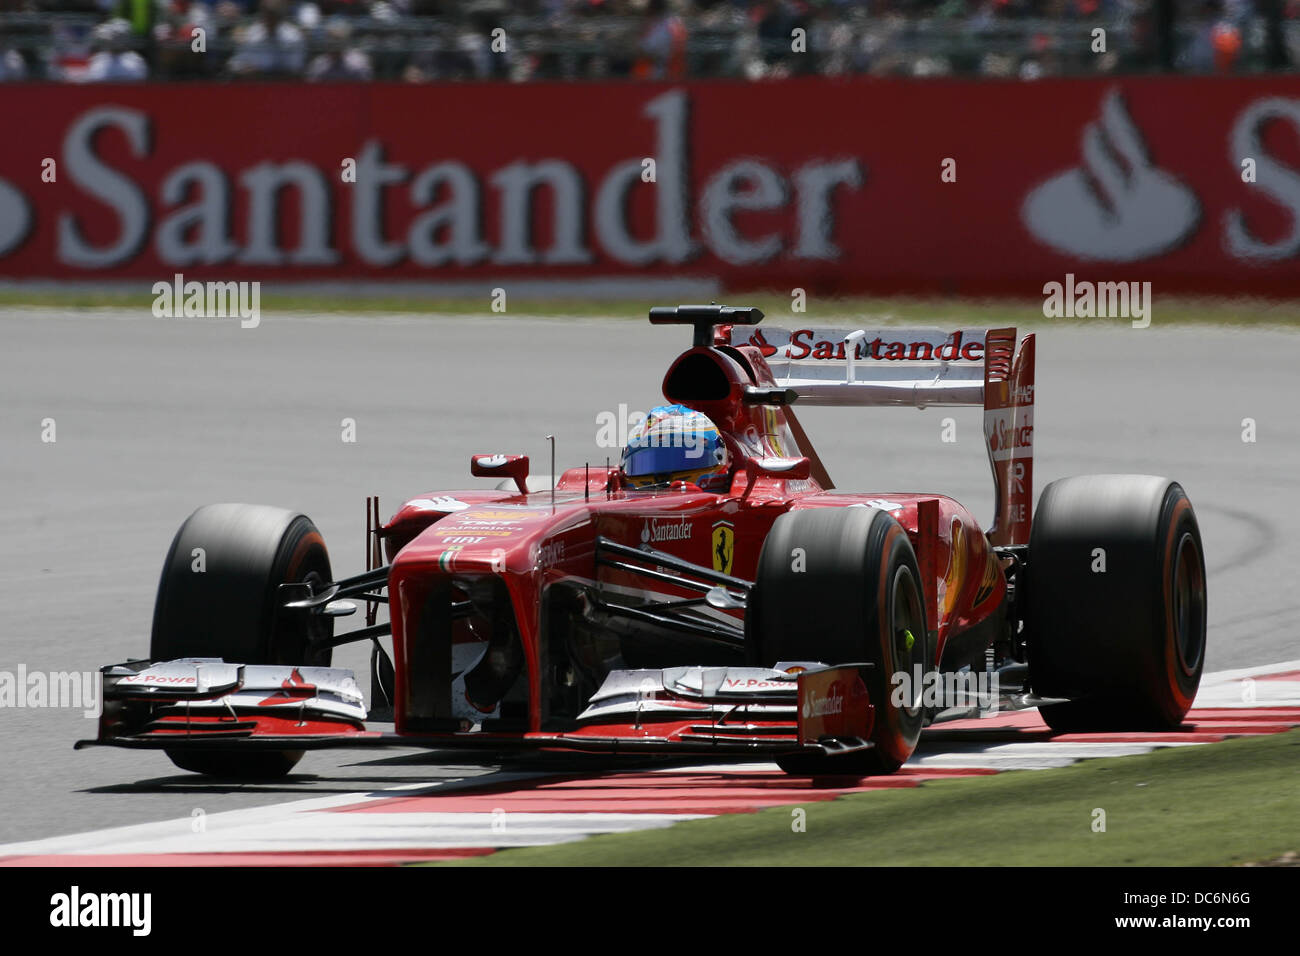 Fernando Alonso, Ferrari F1 beim britischen Grand Prix F1 2013, Silverstone. Stockfoto